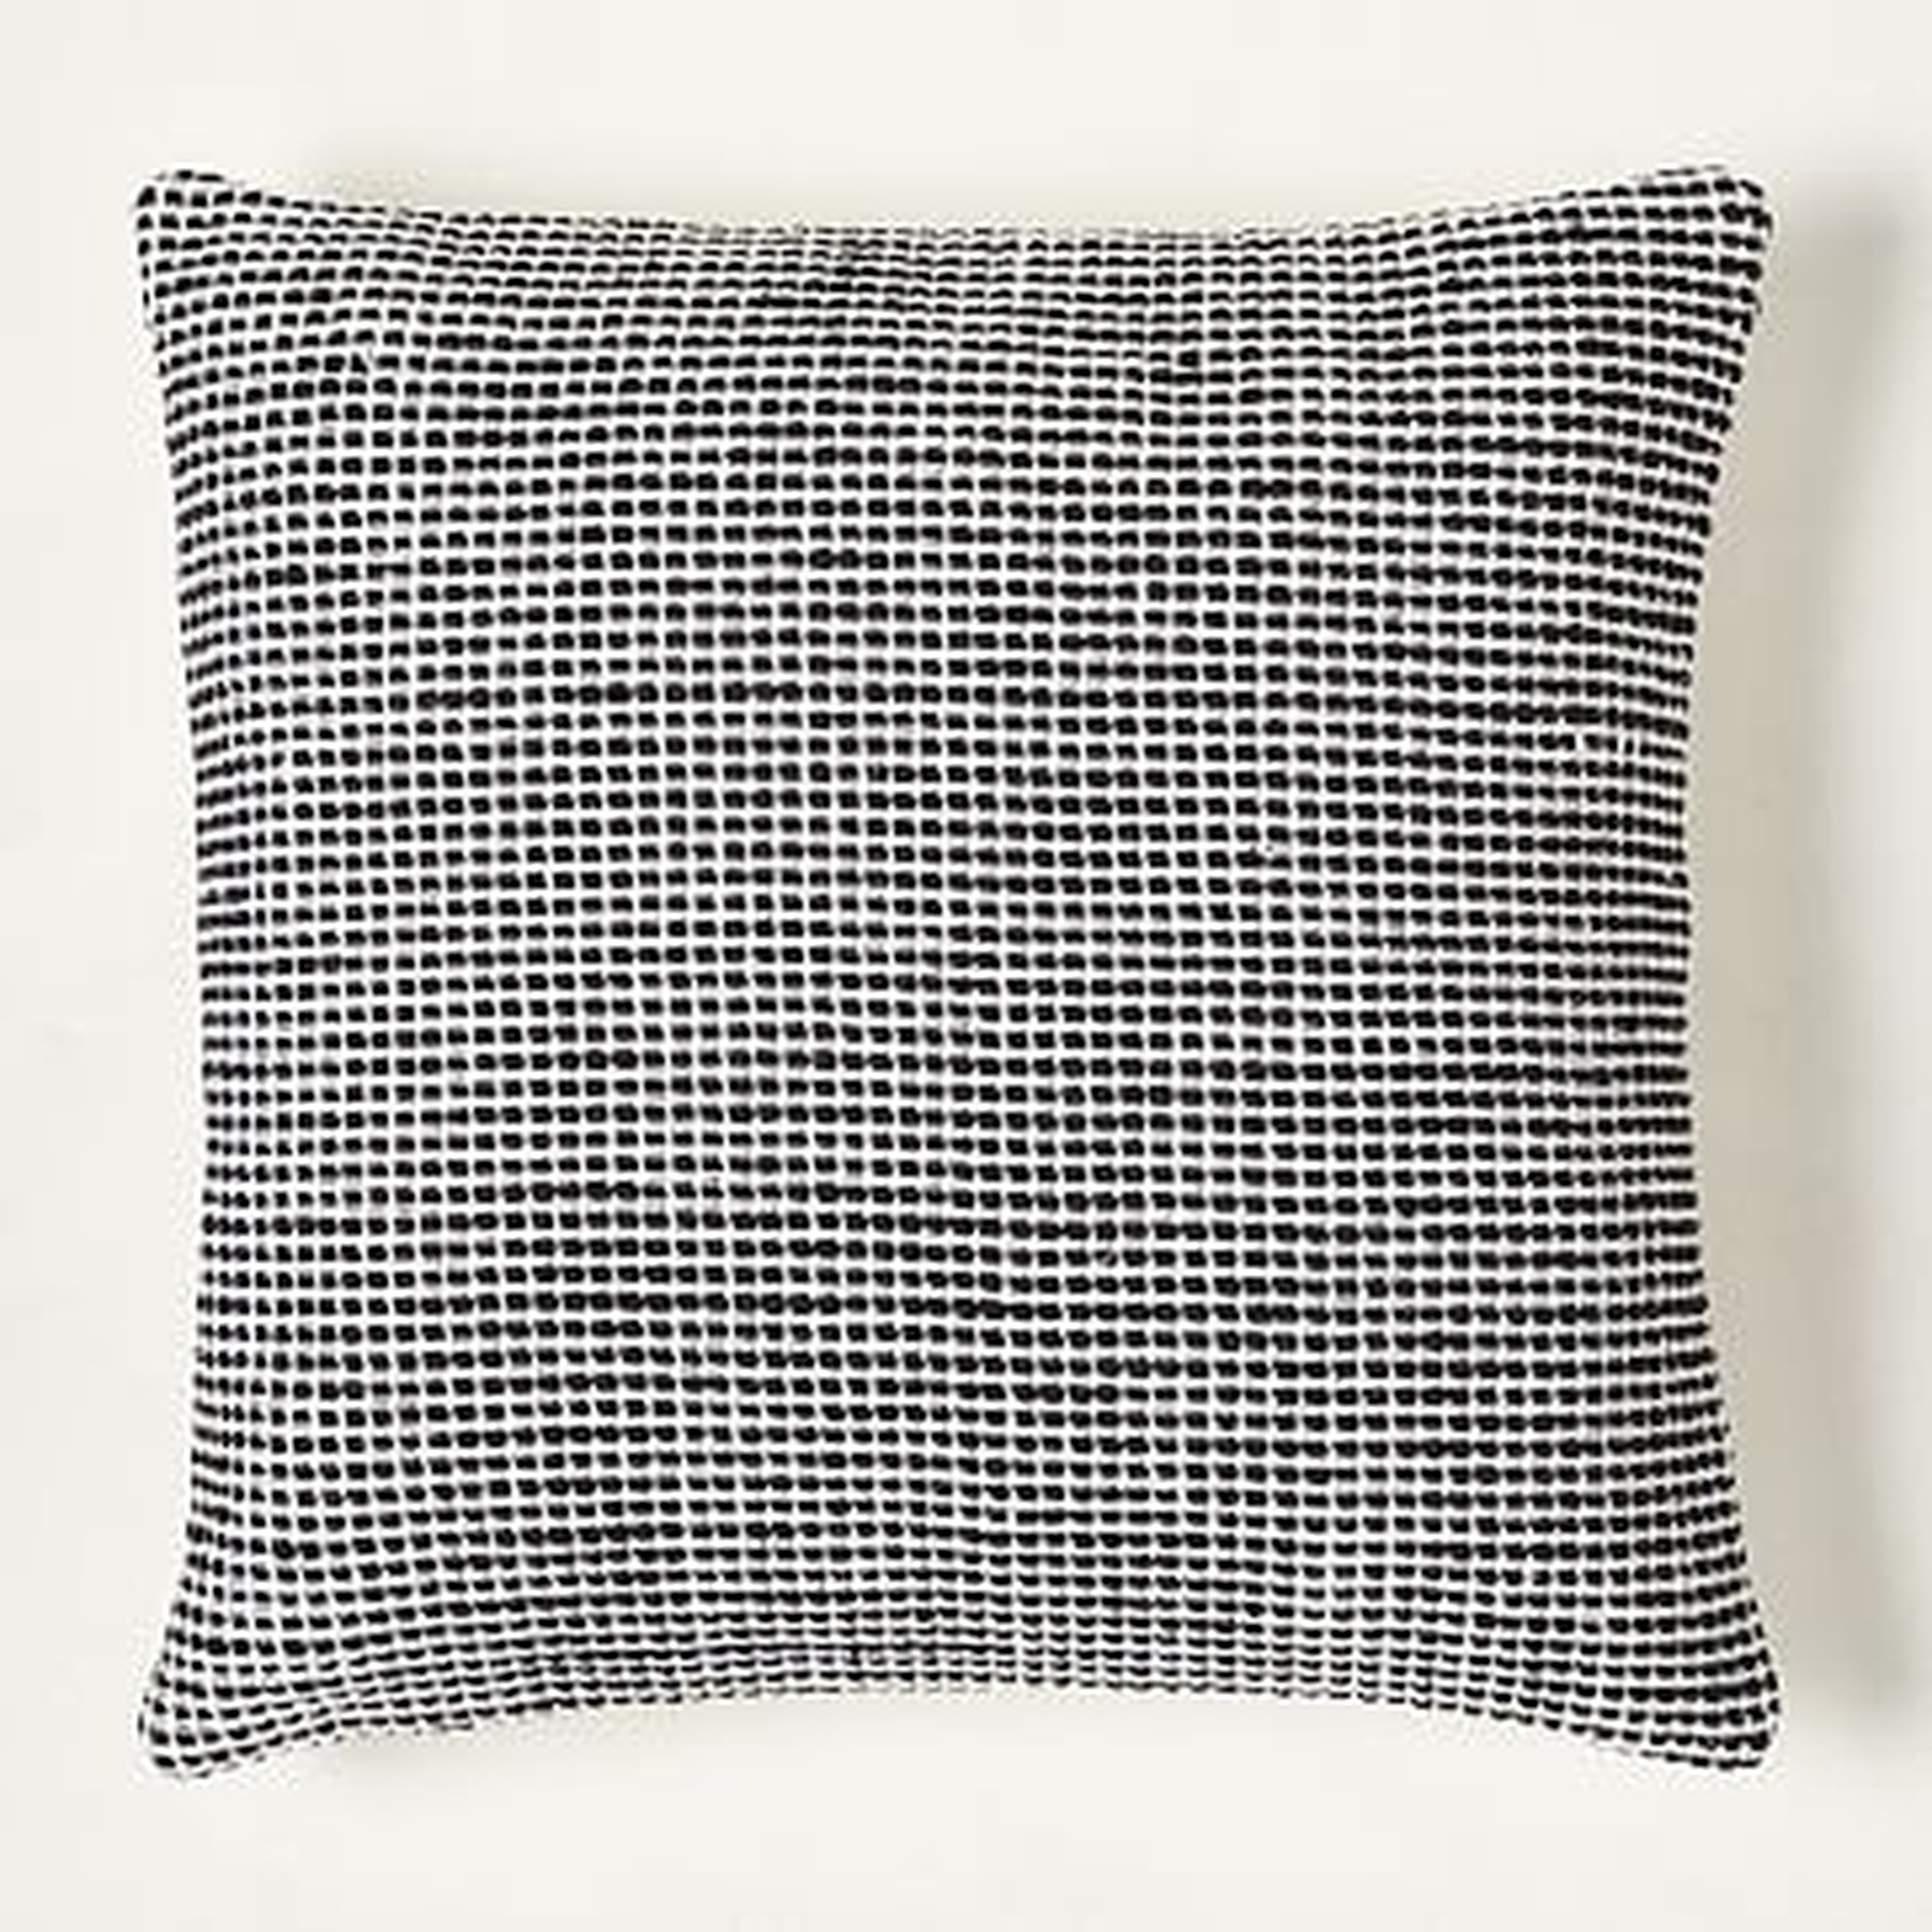 Textured Dimple Dot Pillow Cover, 20"x20", Black, Set of 2 - West Elm